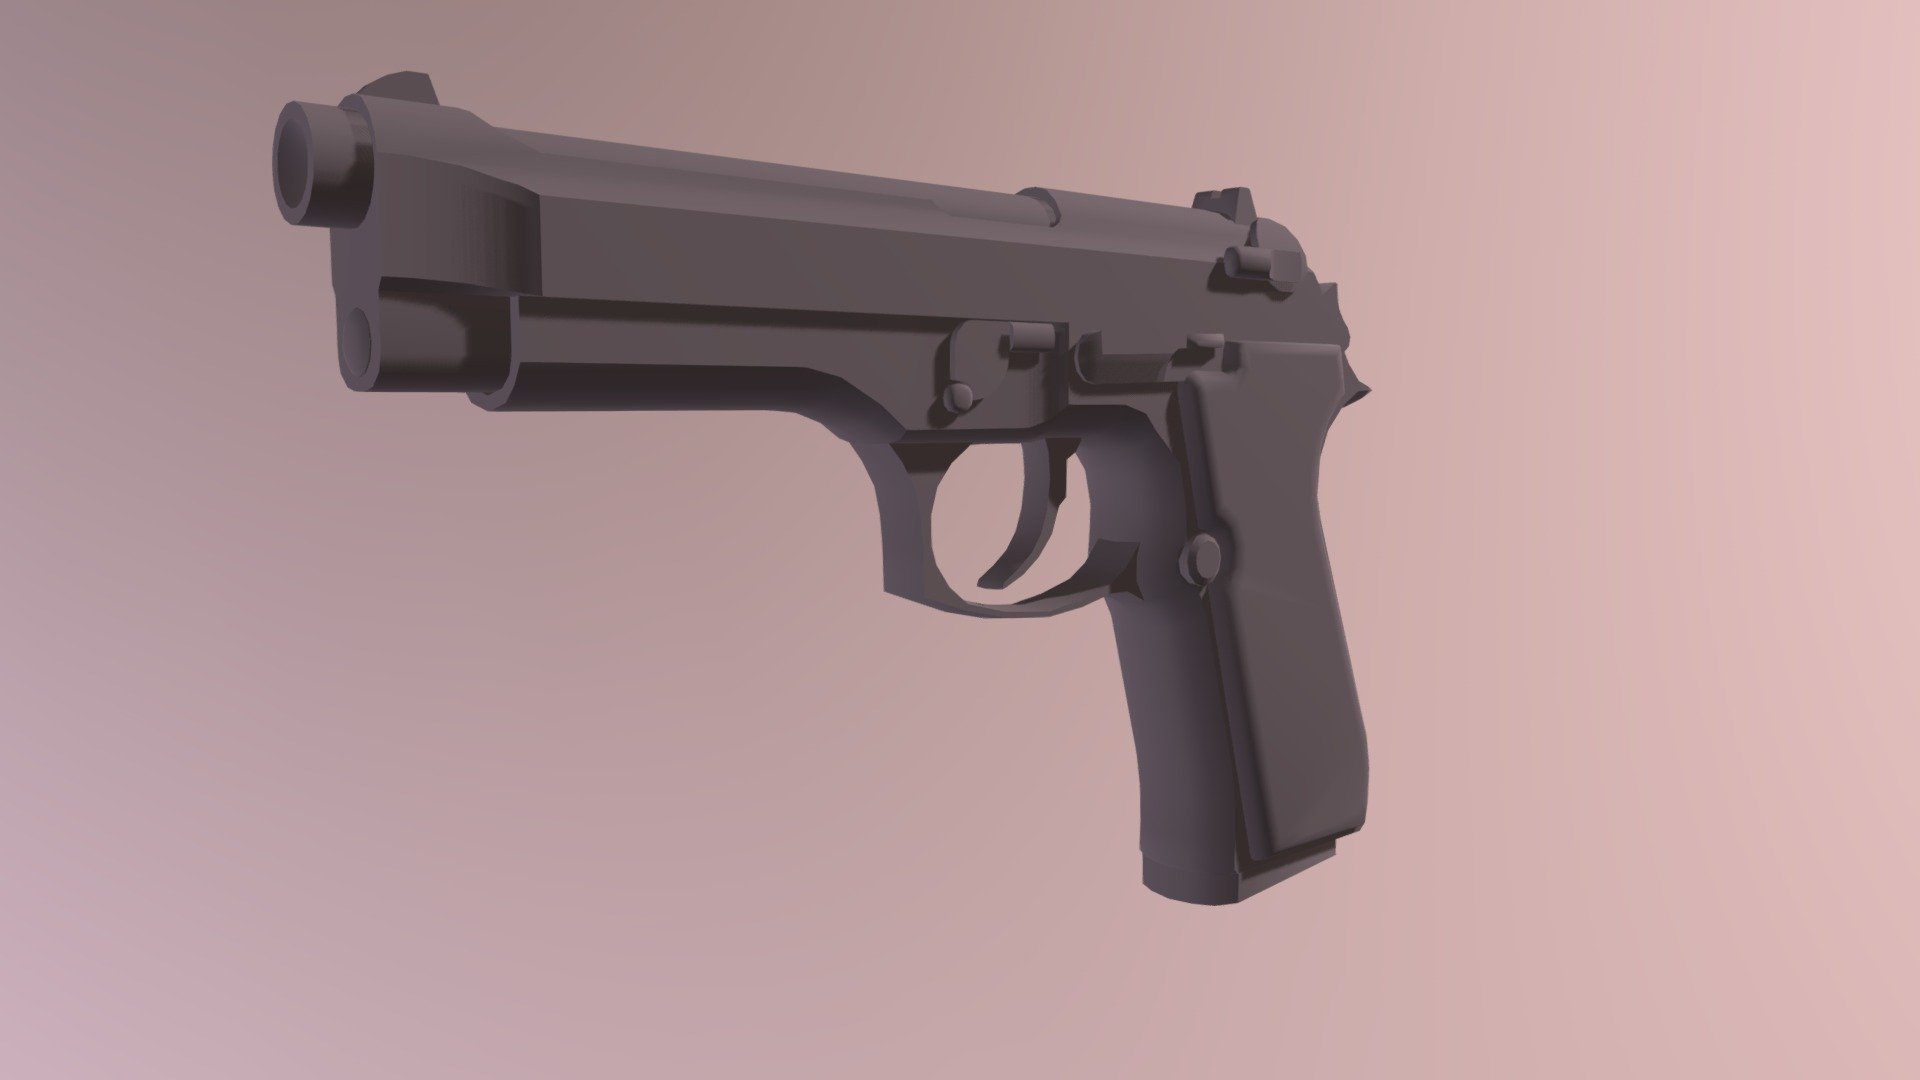 Beretta 92 Pistol